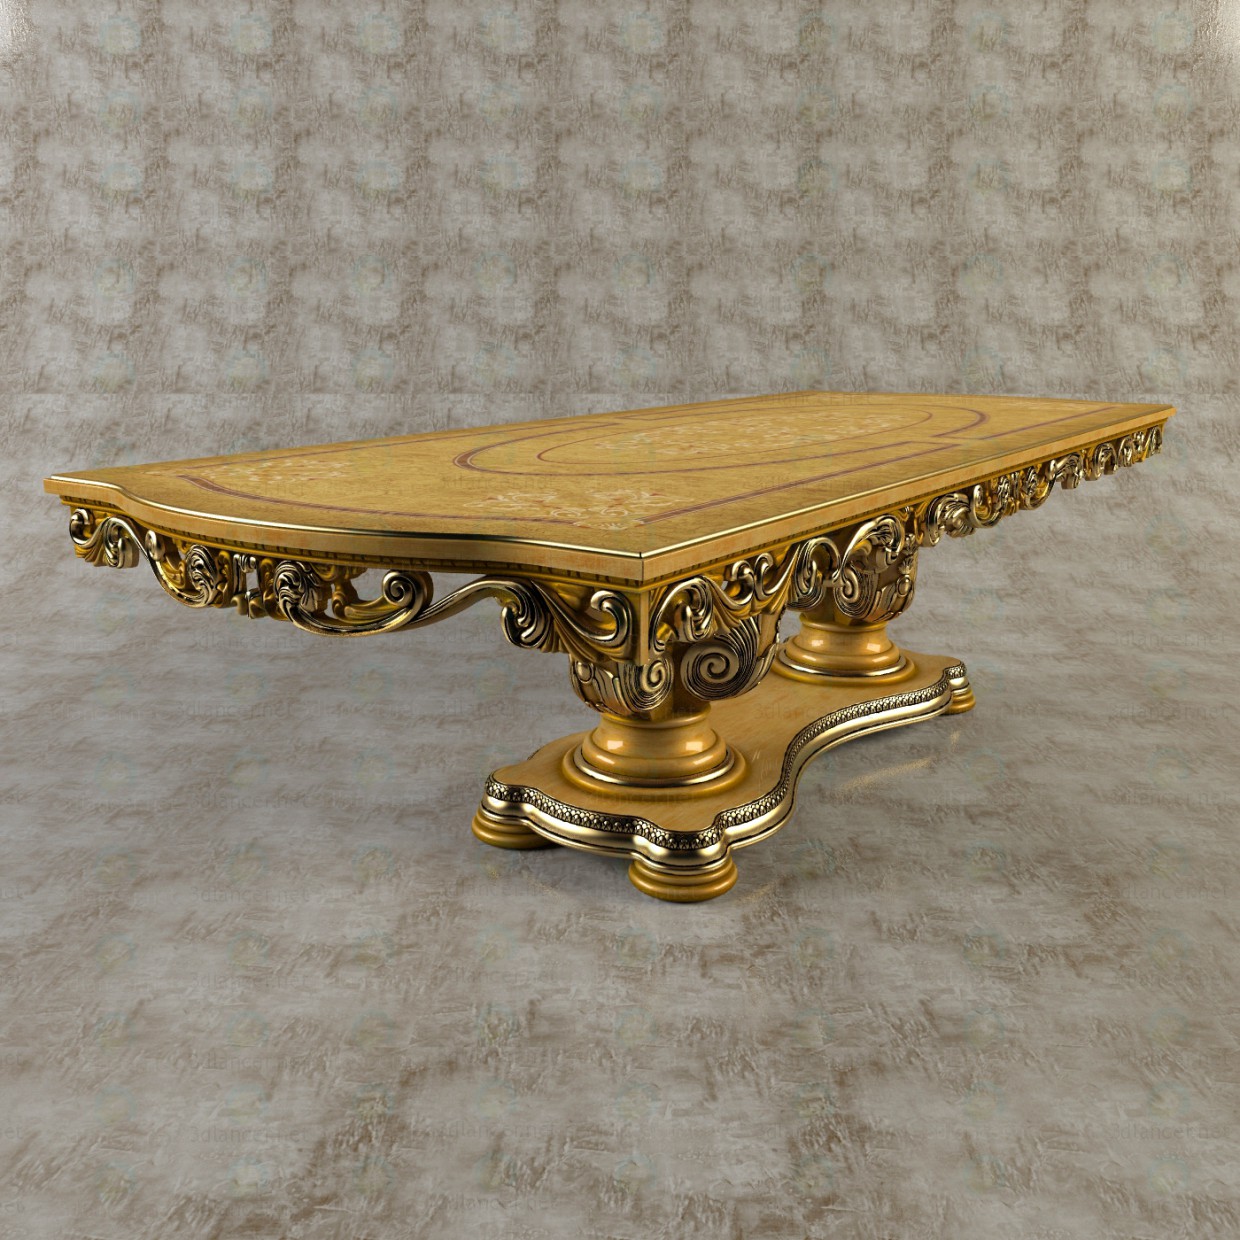 3d Dining table model buy - render